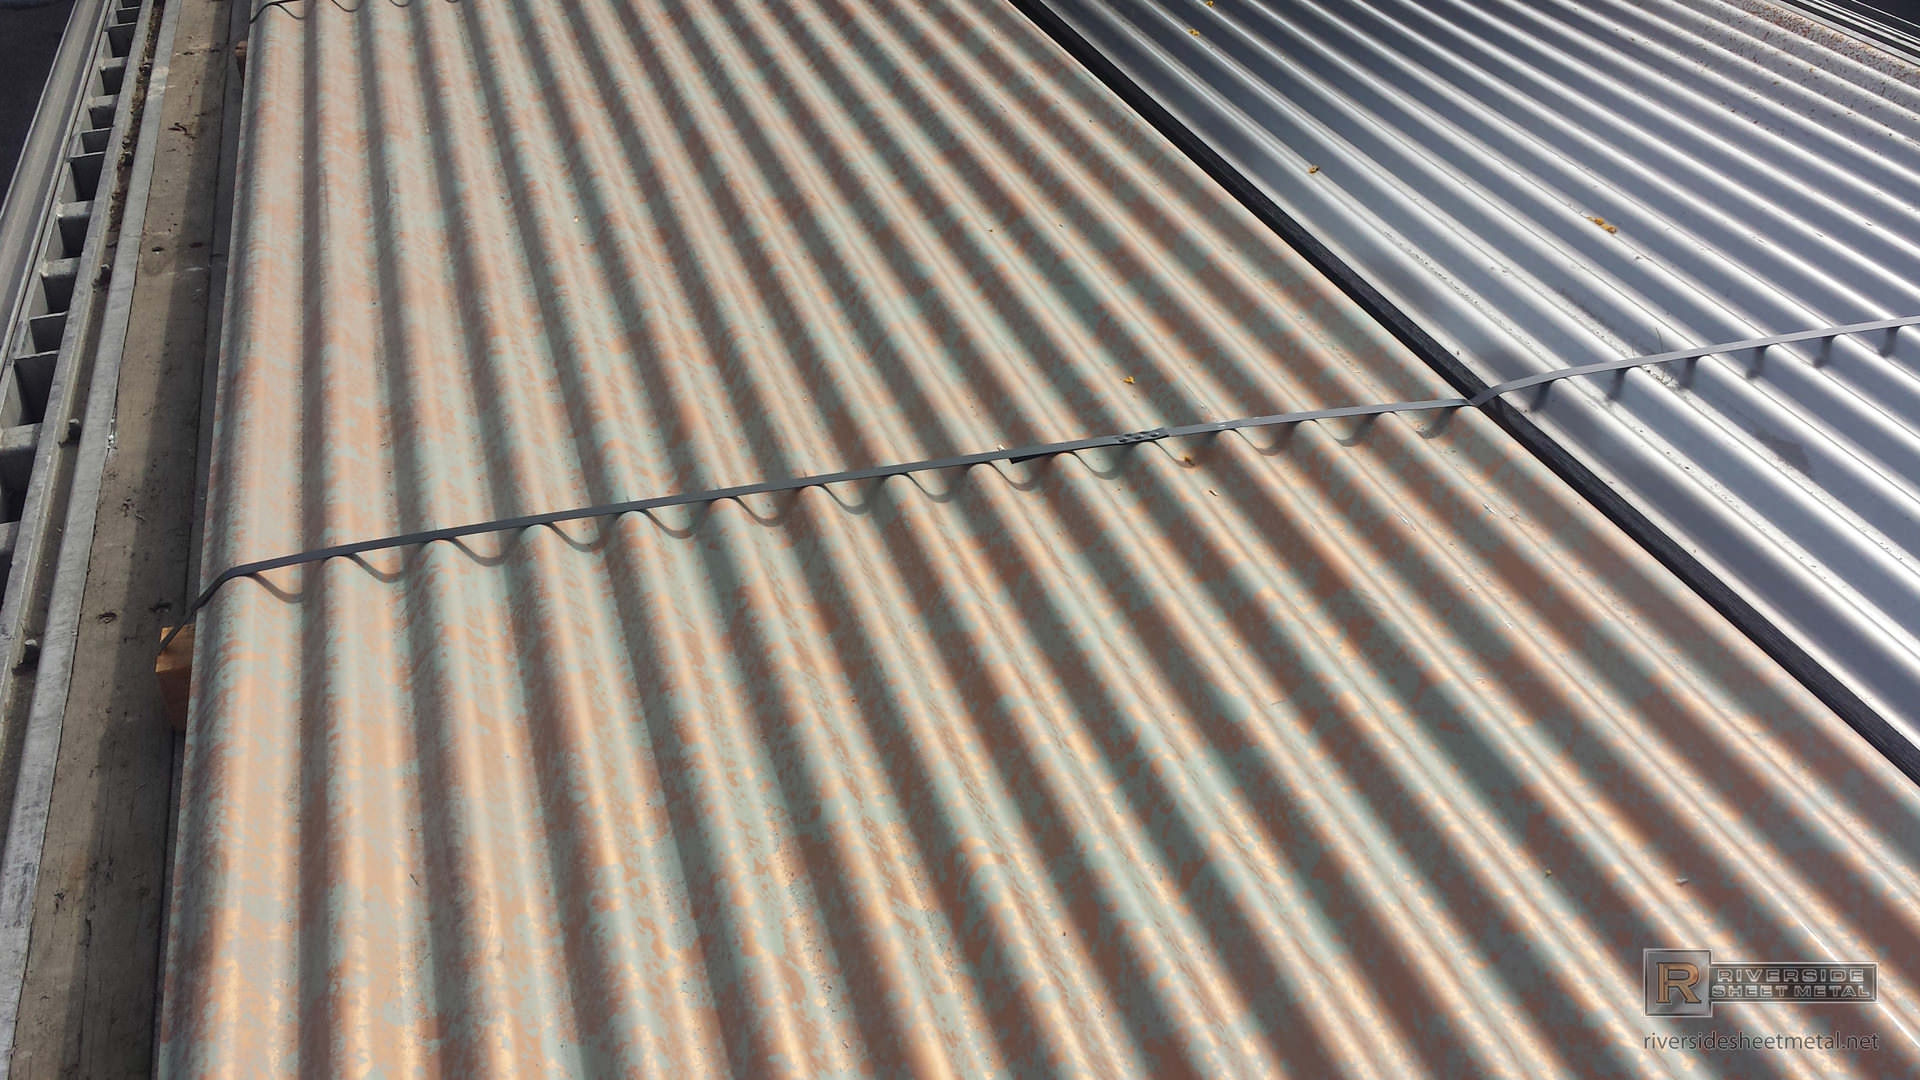 Corrugated roof & wall panels. Steel, Aluminum, Corten & more